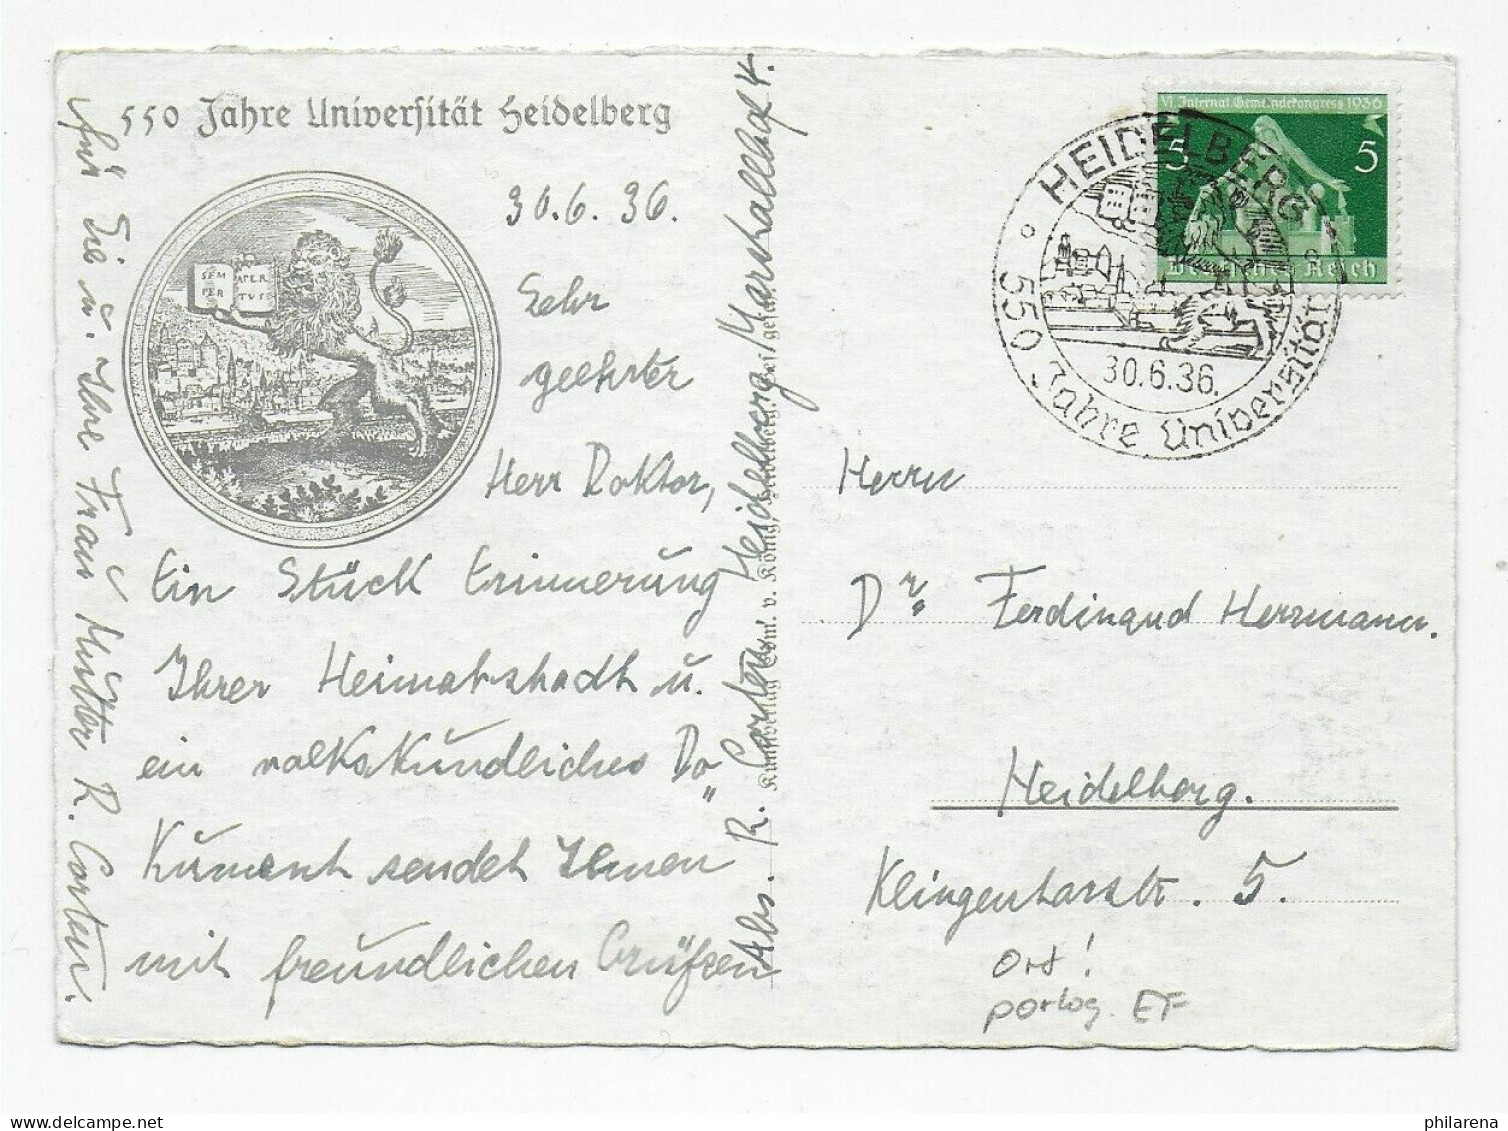 550 Jahre Universität Heidelberg, Ruperto Carola, 1936 - Covers & Documents